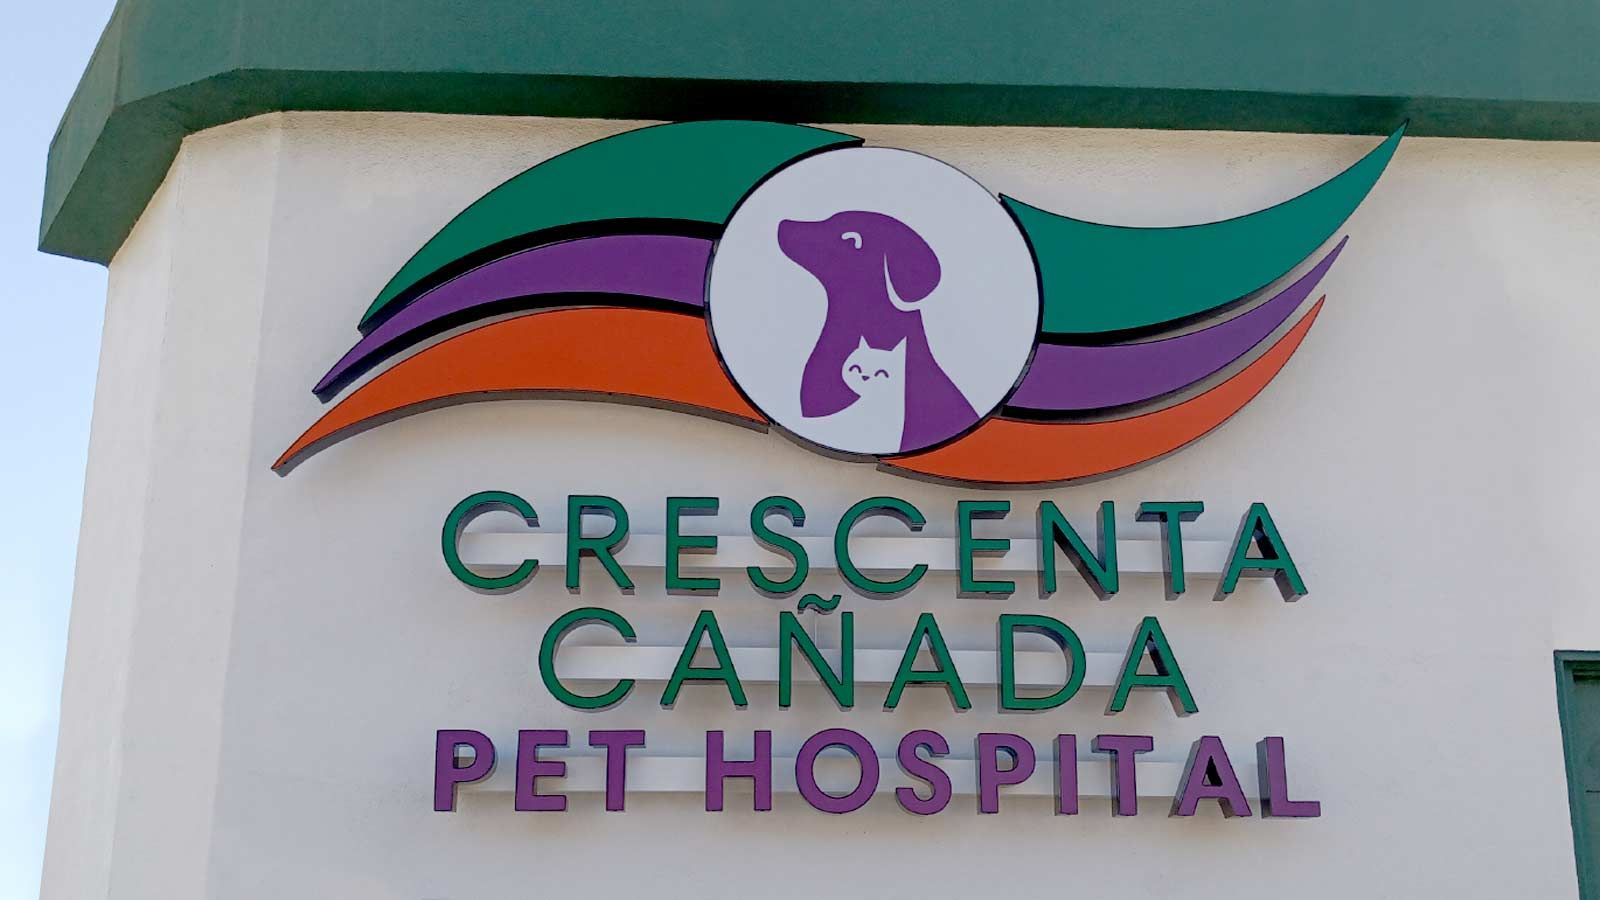 Crescenta Cañada Pet Hospital outdoor channel letters